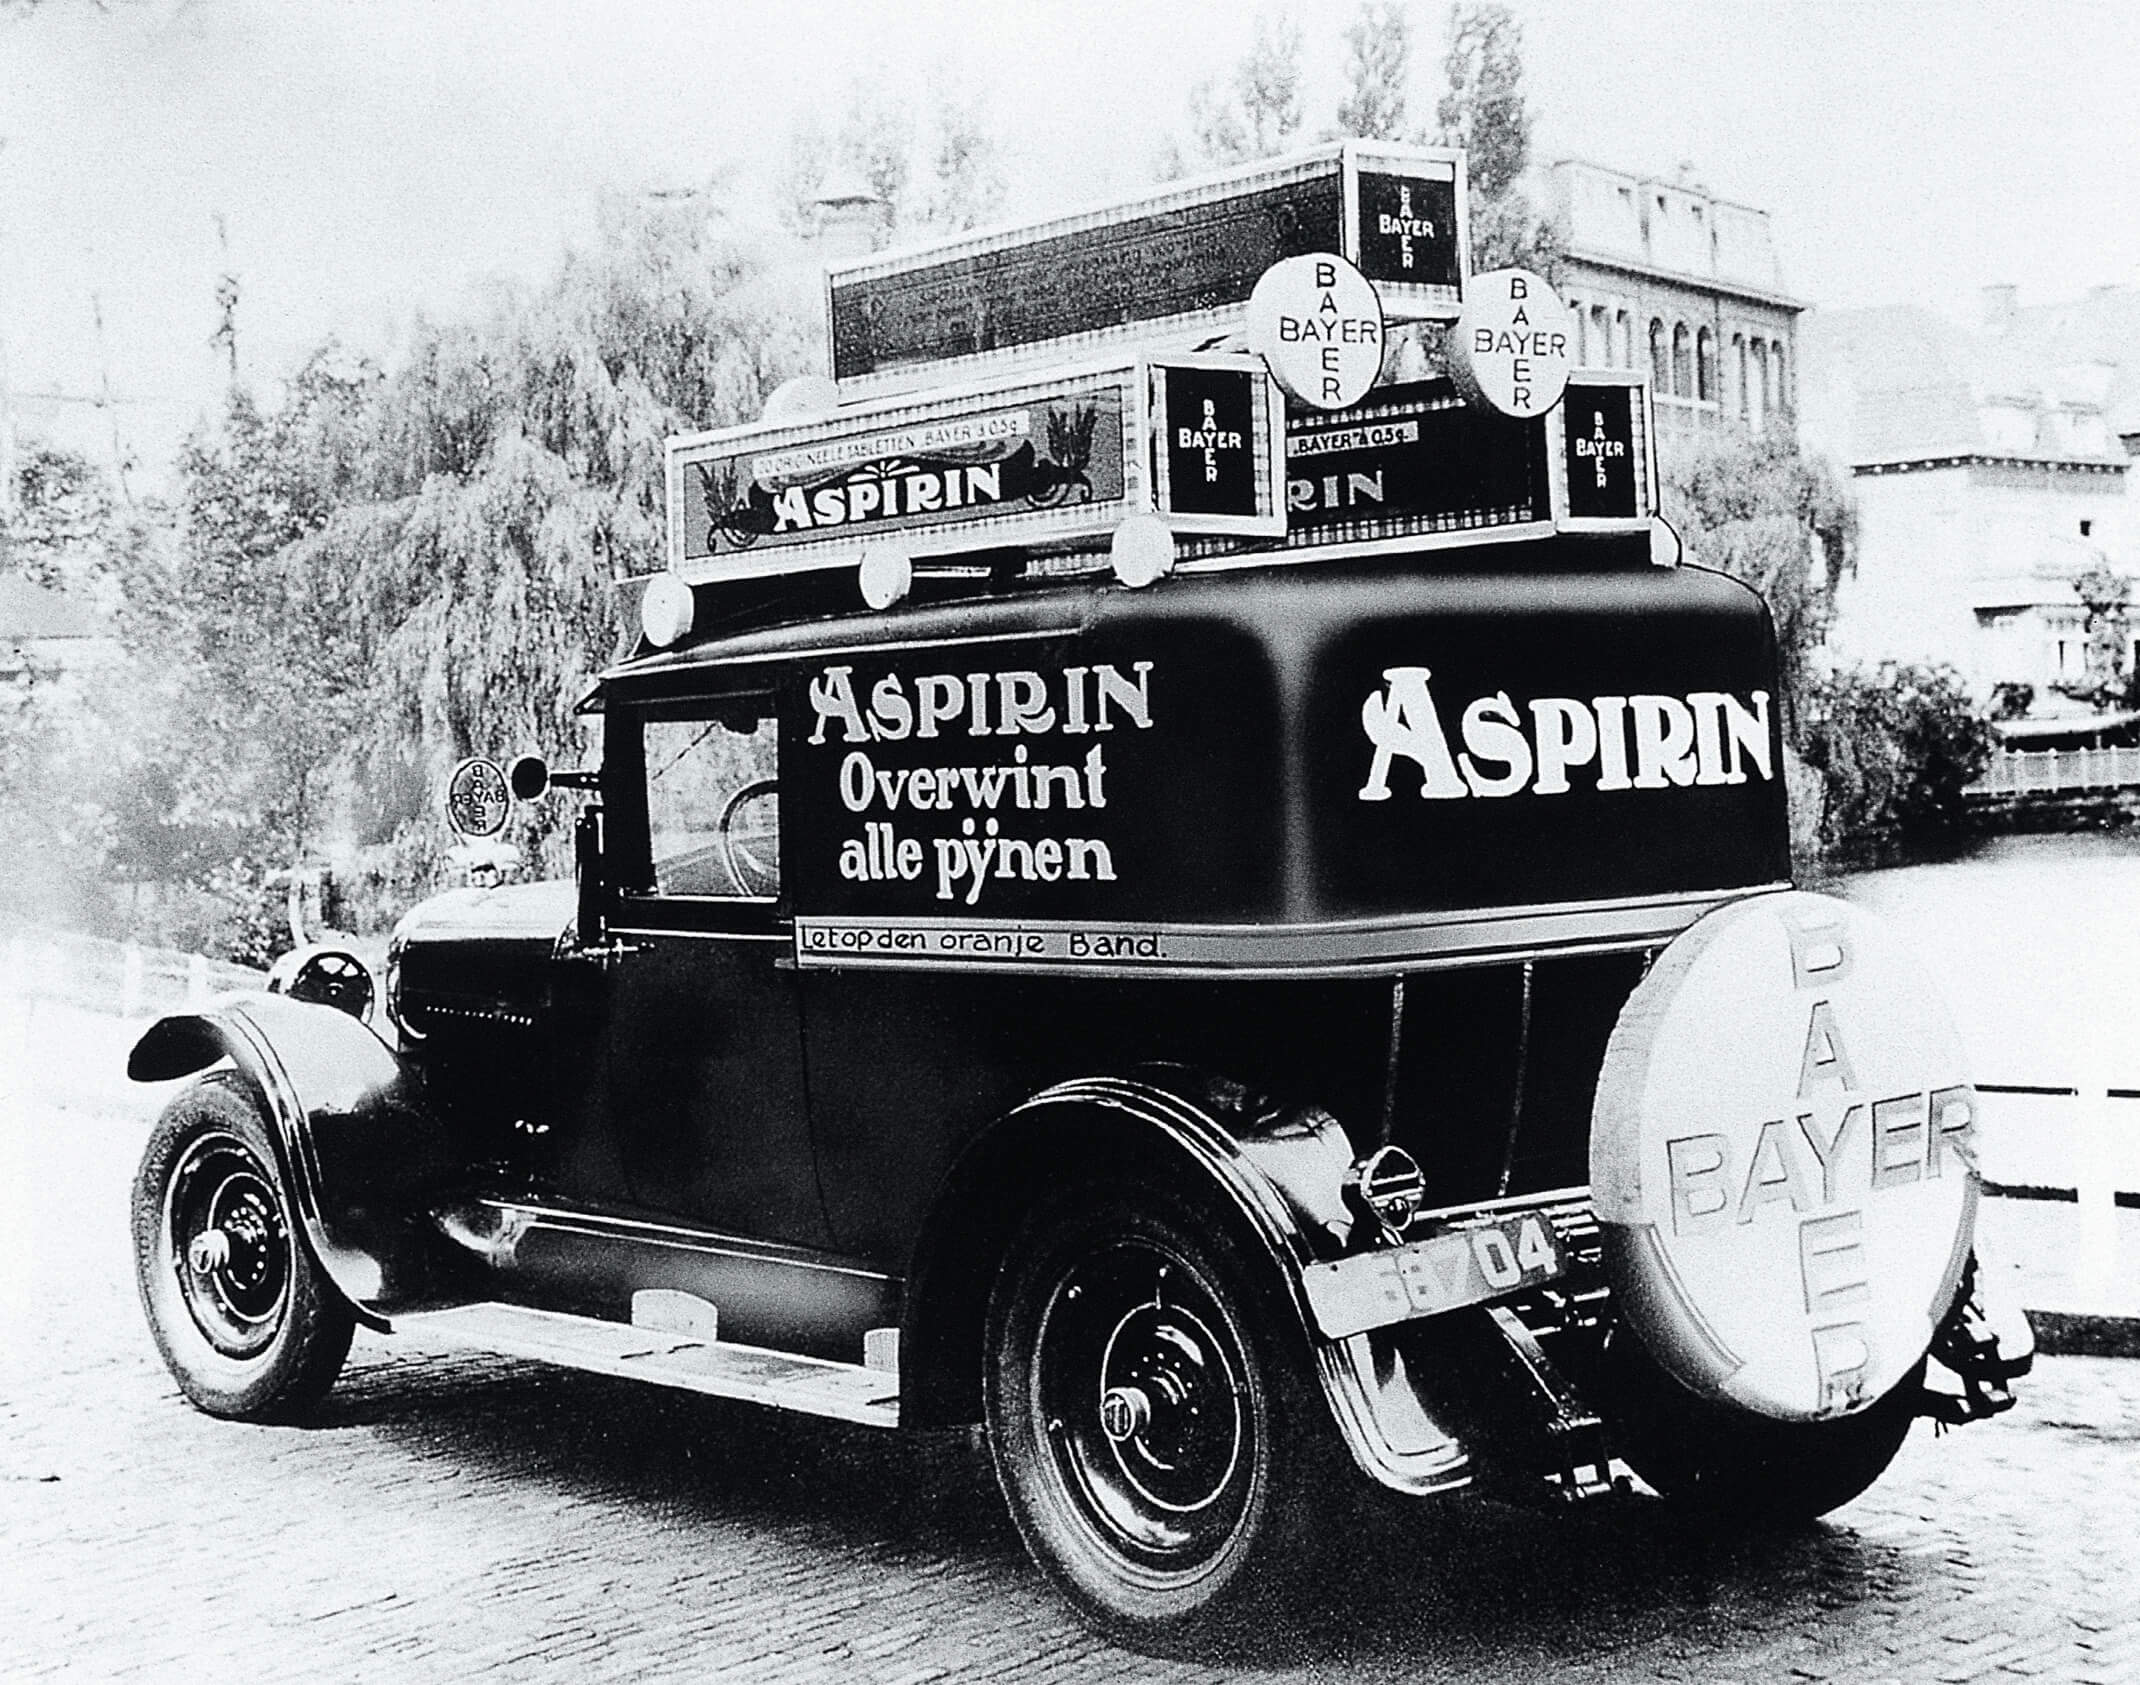 Aspirin advertisement on car anno 1929